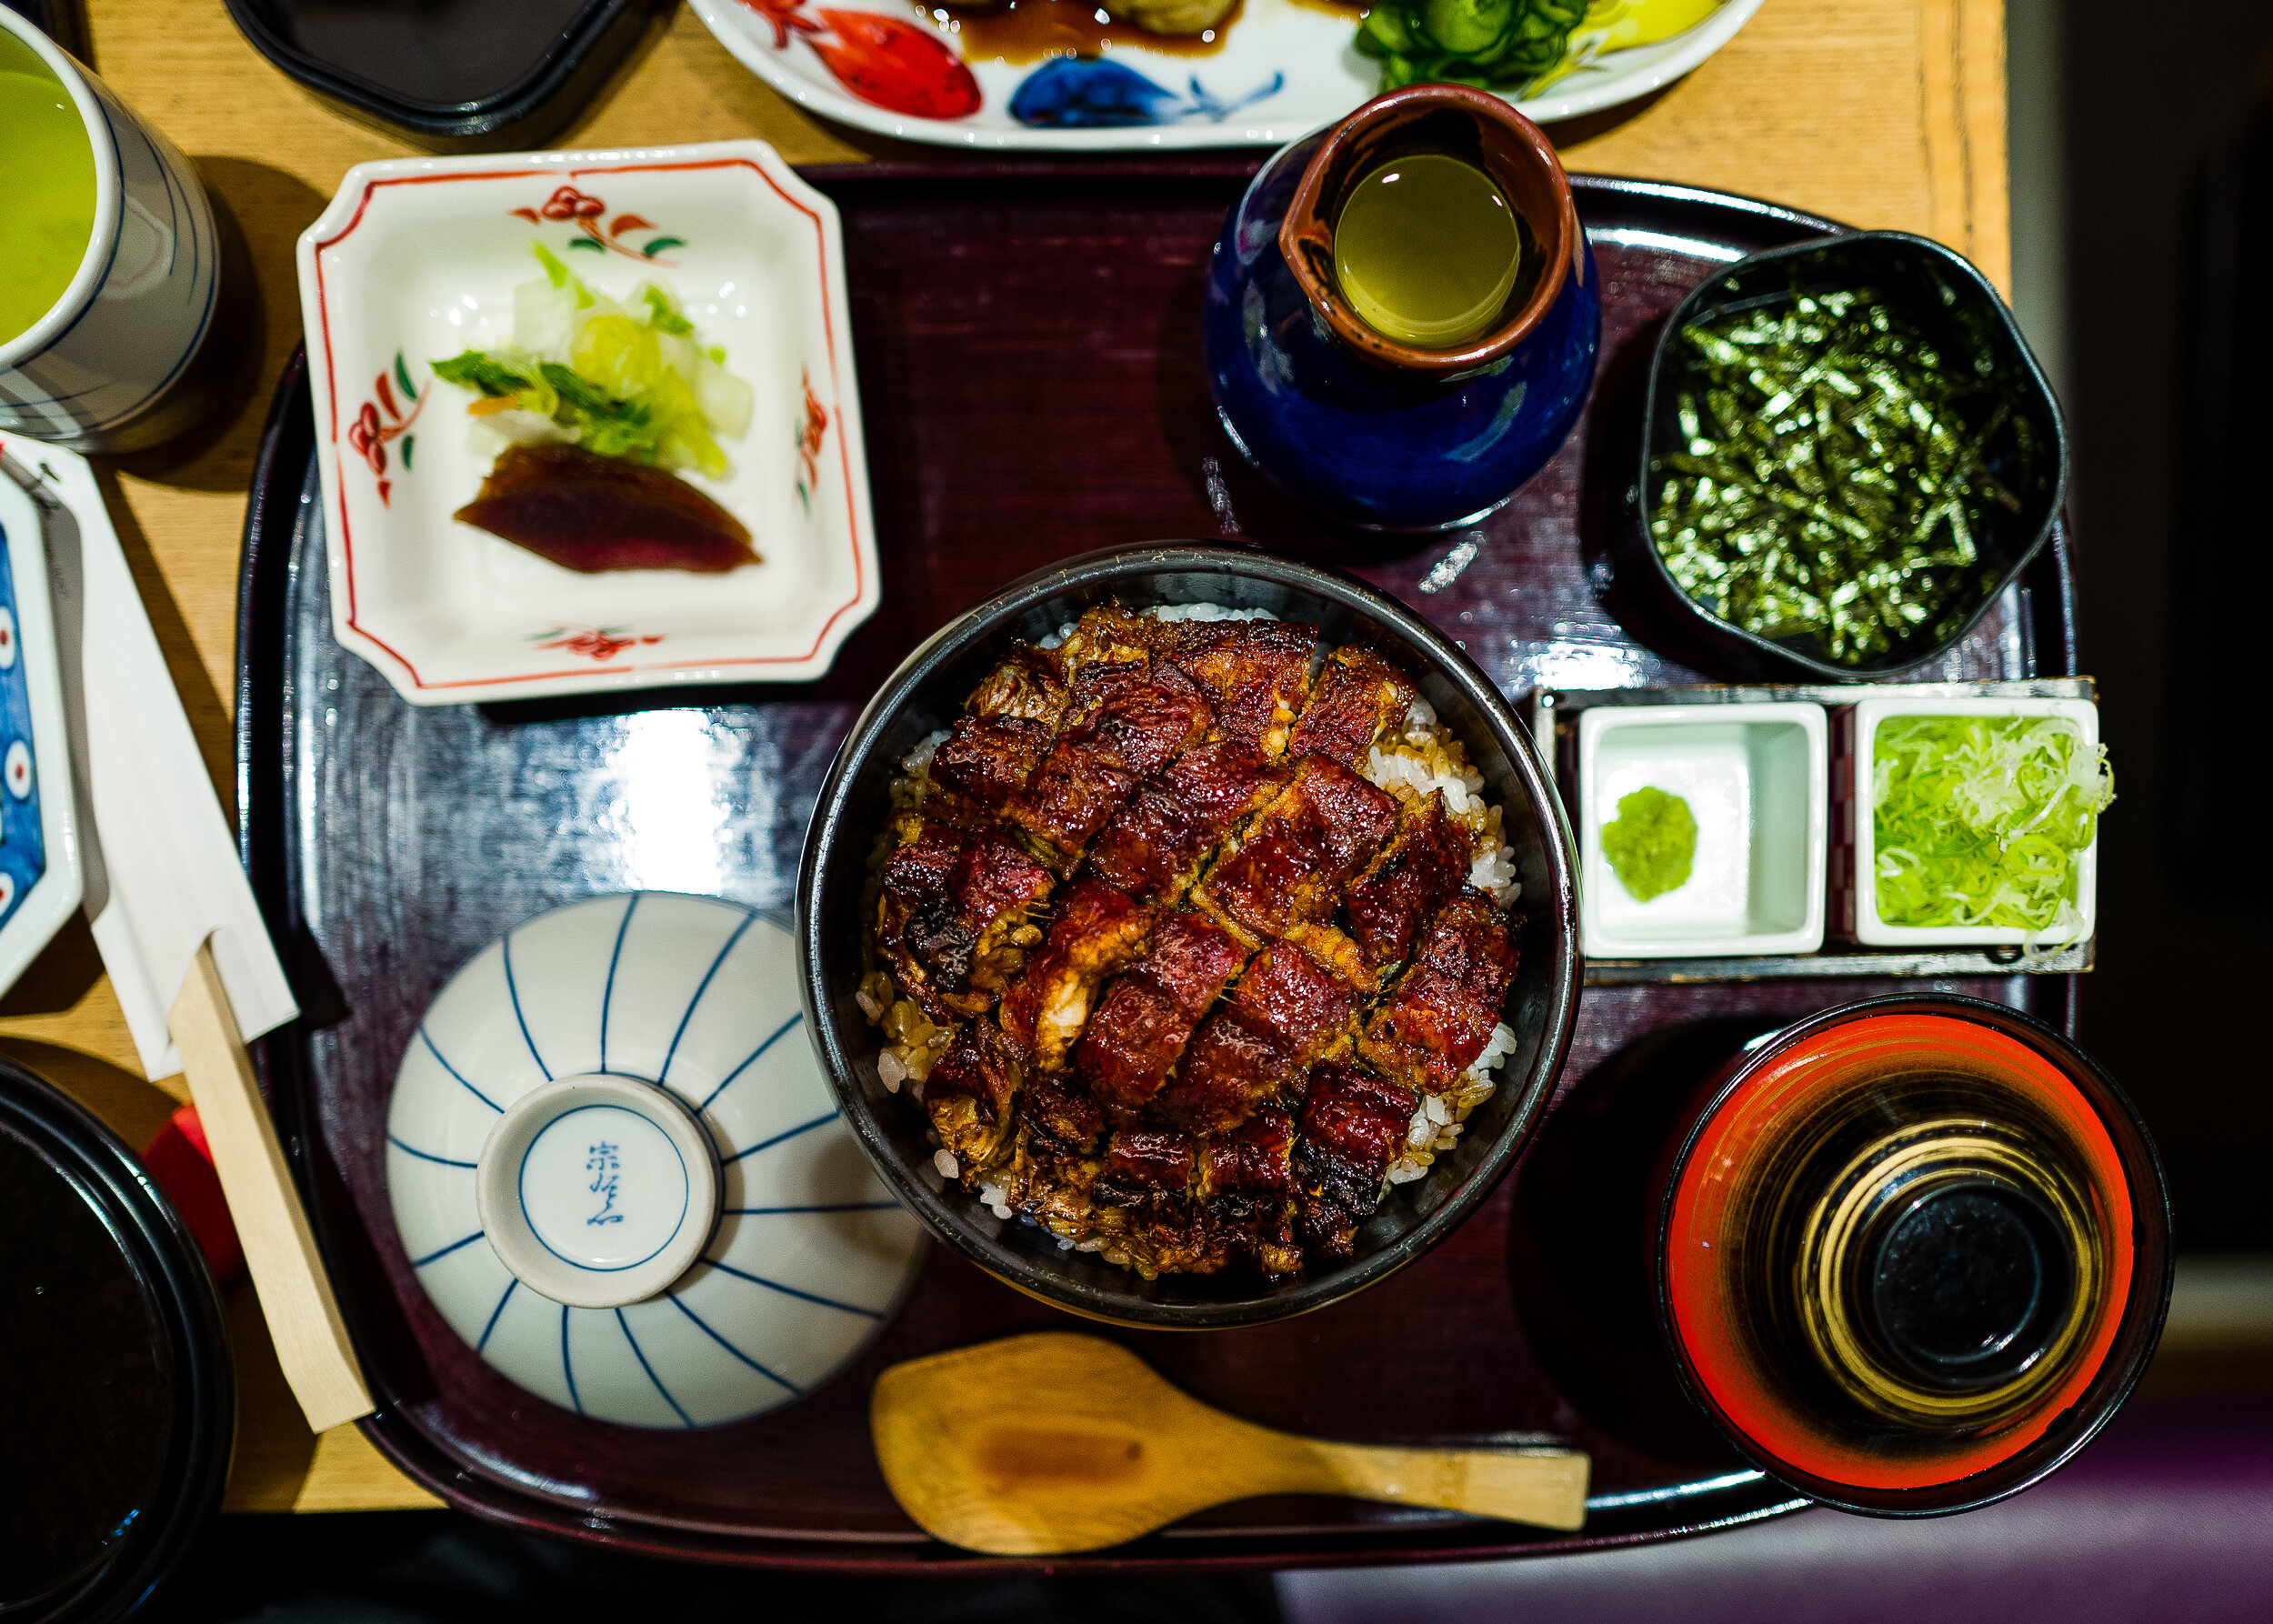  Clockwise from upper left corner: tsukemono (pickles), green tea, nori flakes, scallion and wasabi, miso soup, serving spatula, eating bowl, unagi and rice 